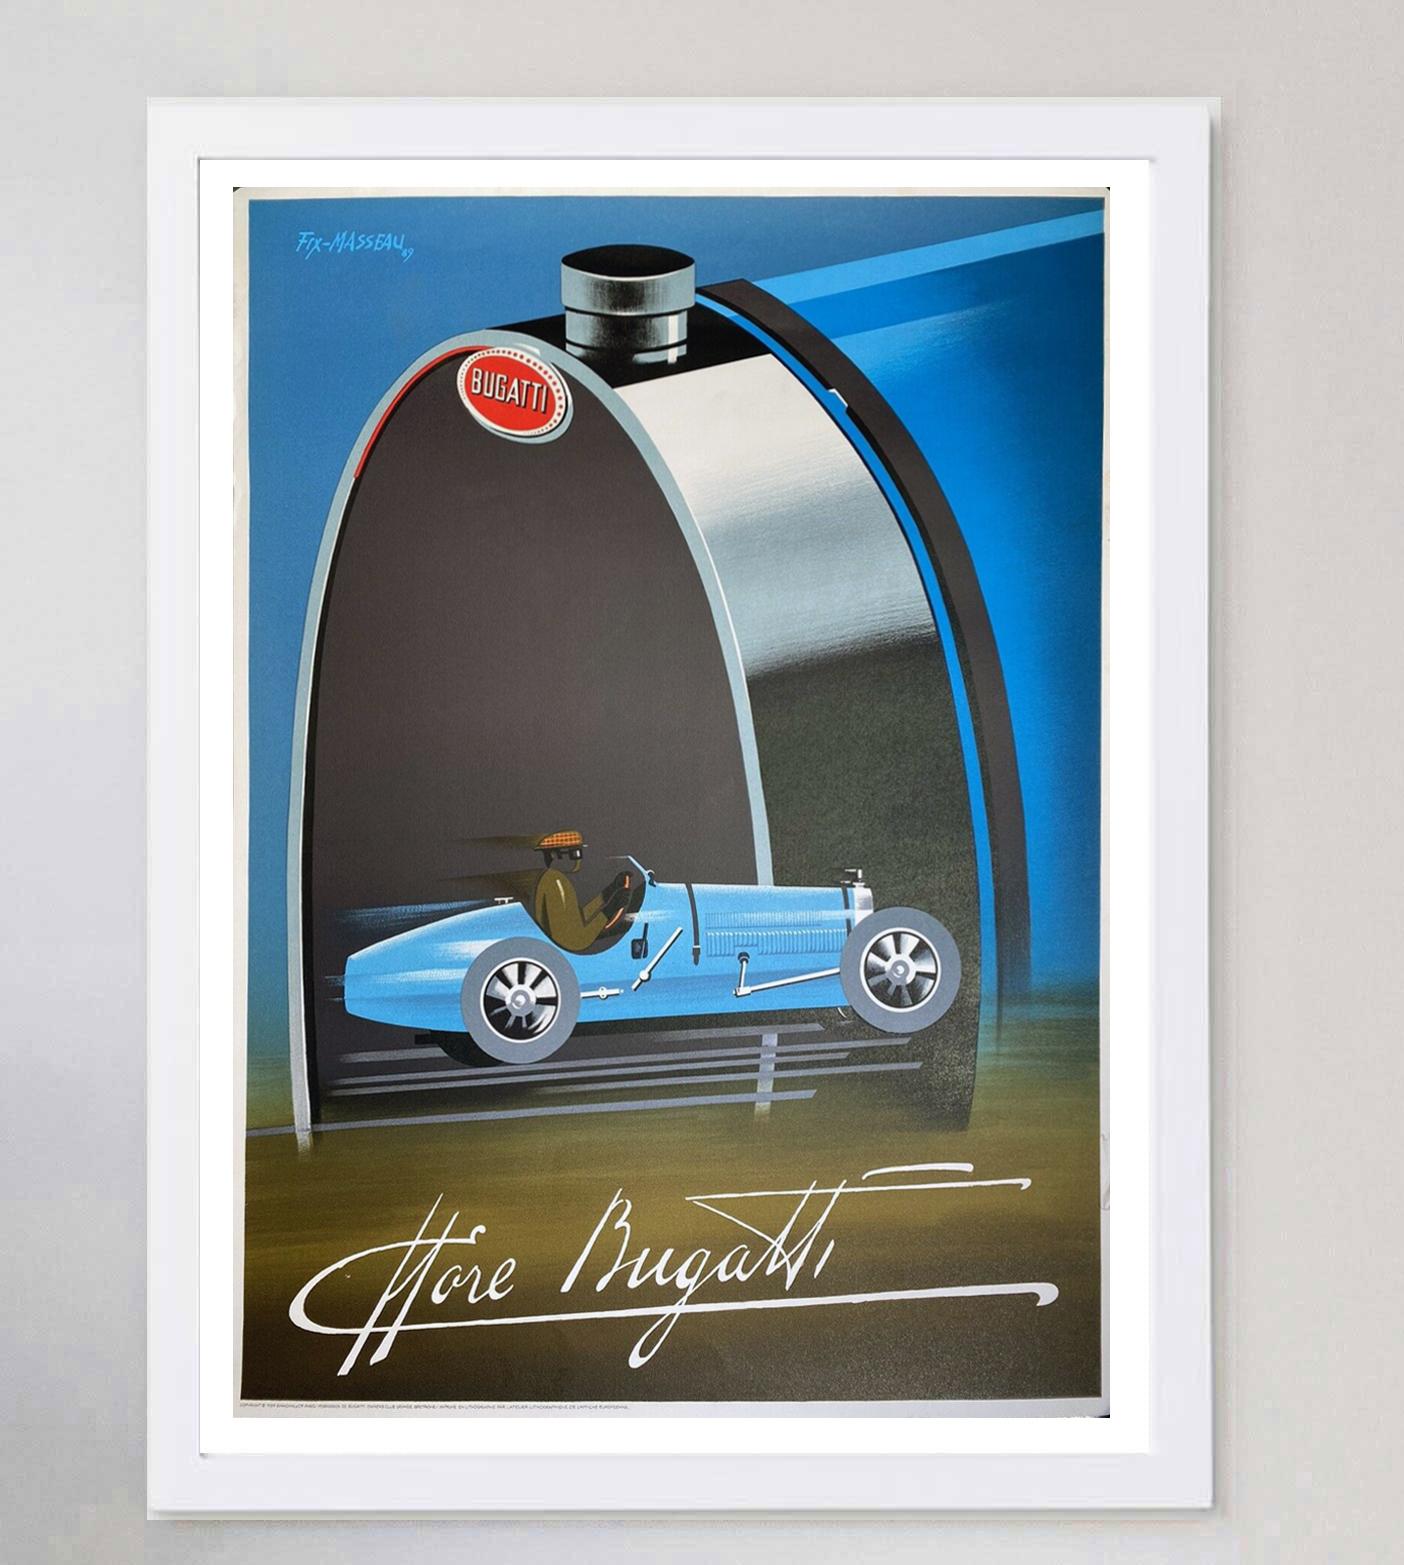 French 1989 Bugatti Original Vintage Poster For Sale